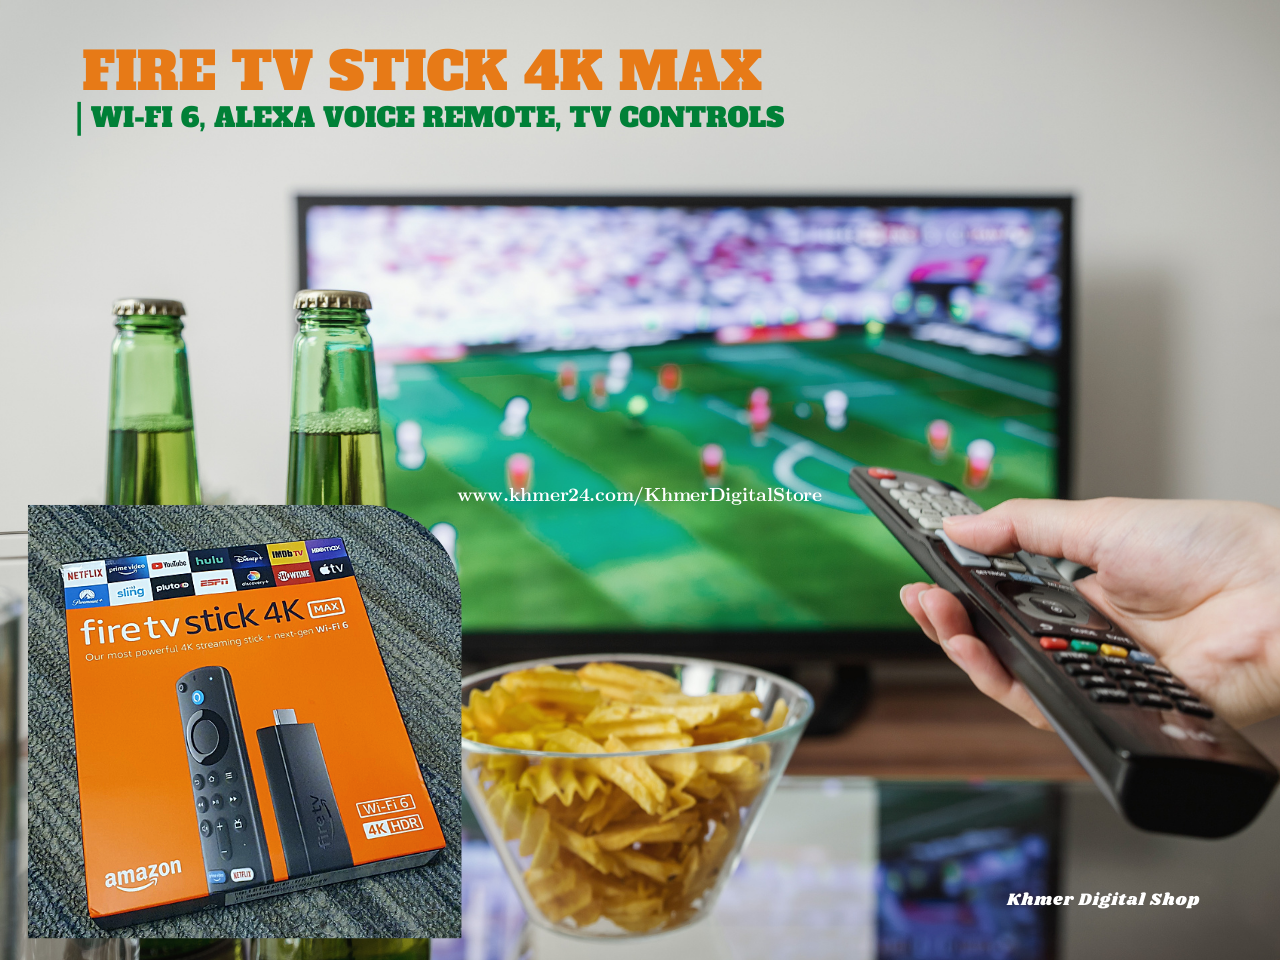 New Fire TV Stick 4K Max streaming device, Wi-Fi 6, Alexa Voice